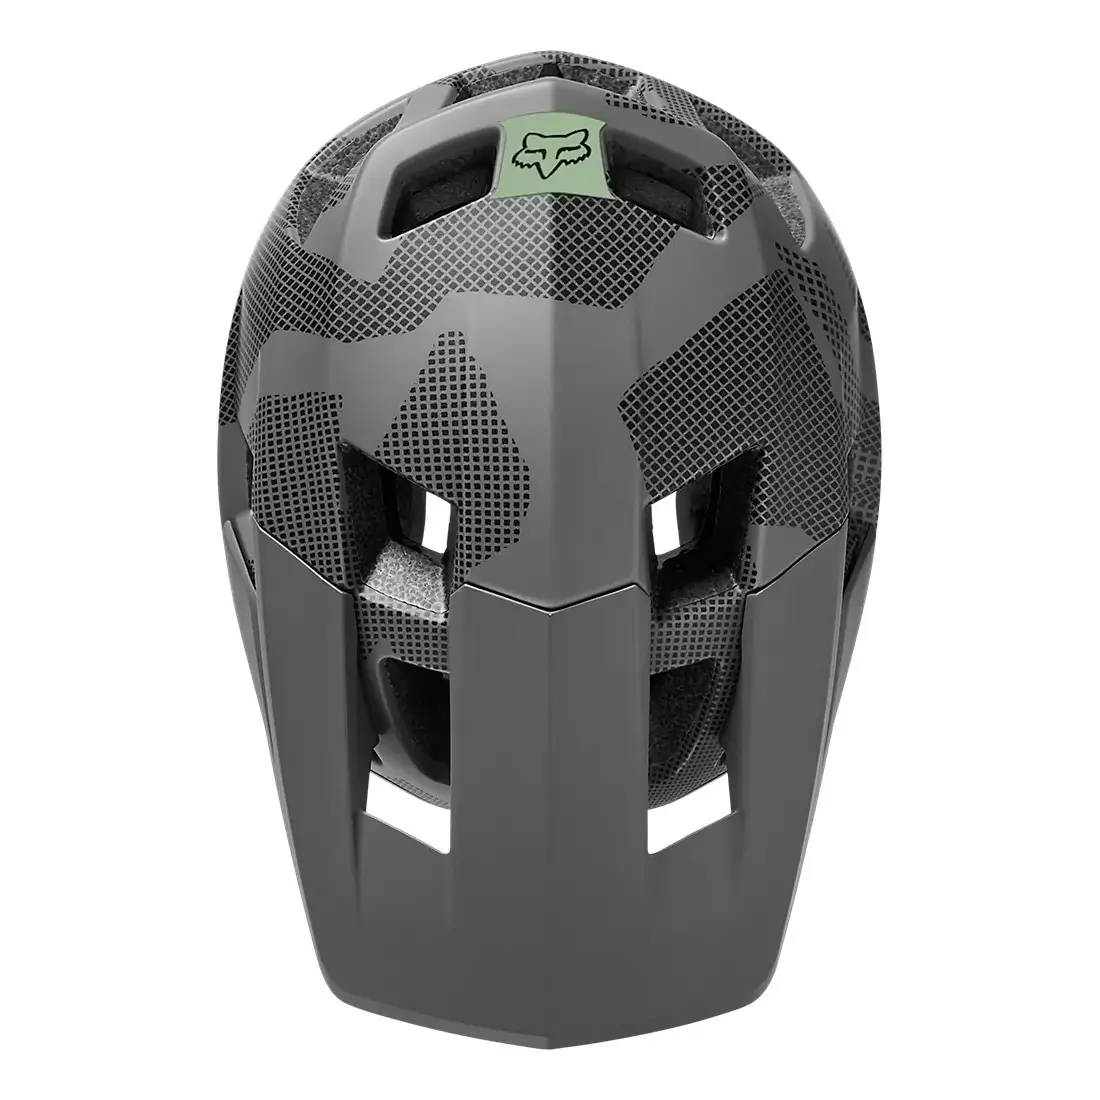 Dropframe Pro Camo Enduro Helmet Gray Camouflage Size S (52-54 cm) #4